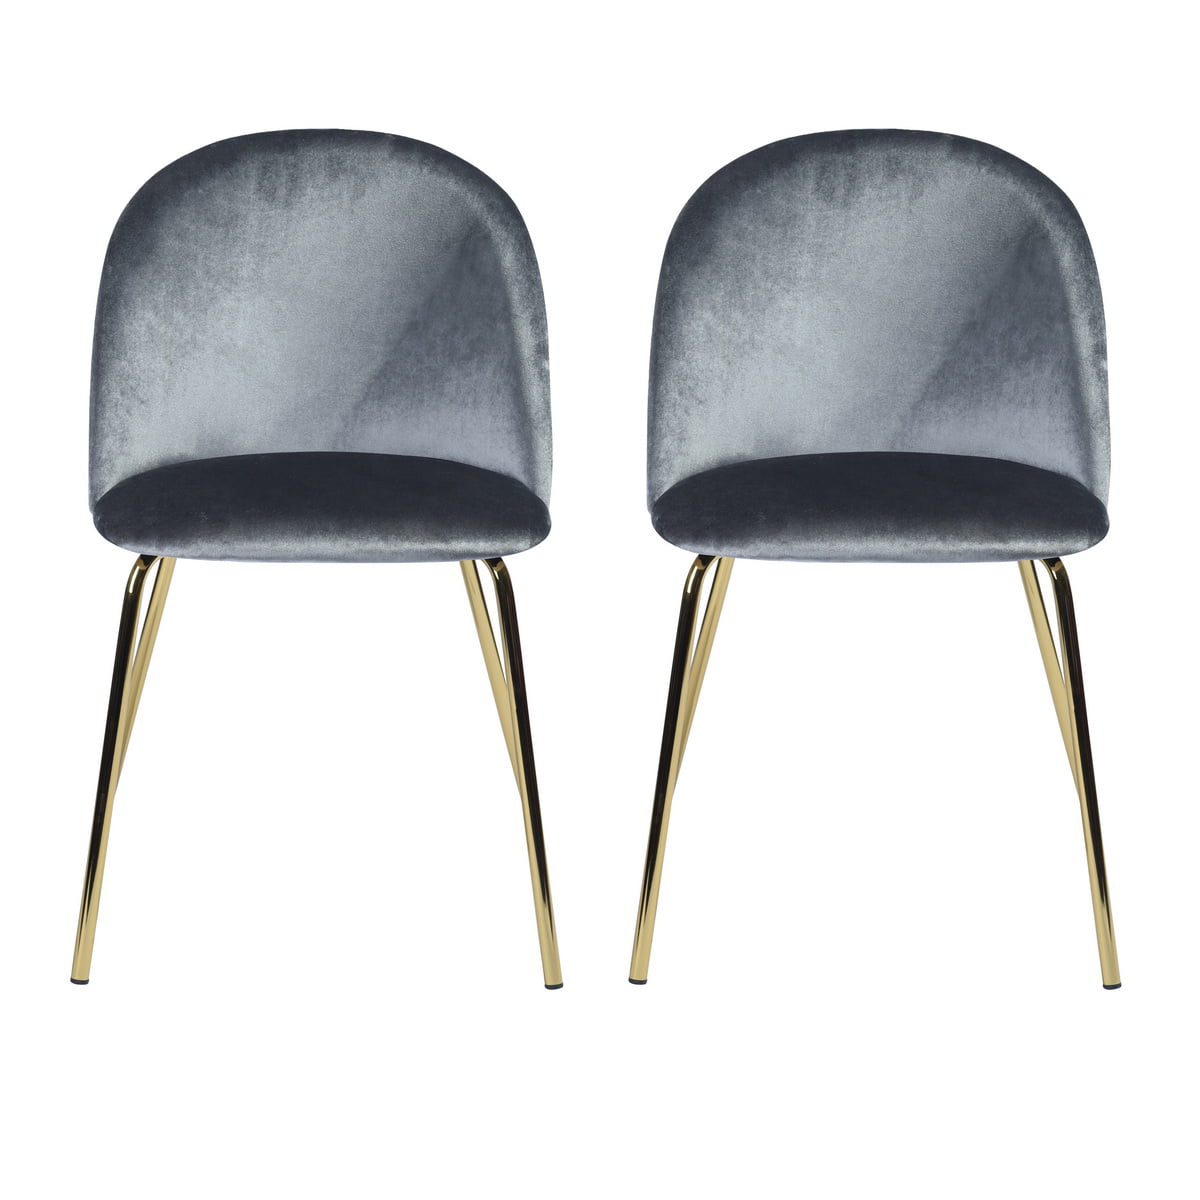 FurnitureR Grey Velvet With Gold Metal Legs Dining Chair